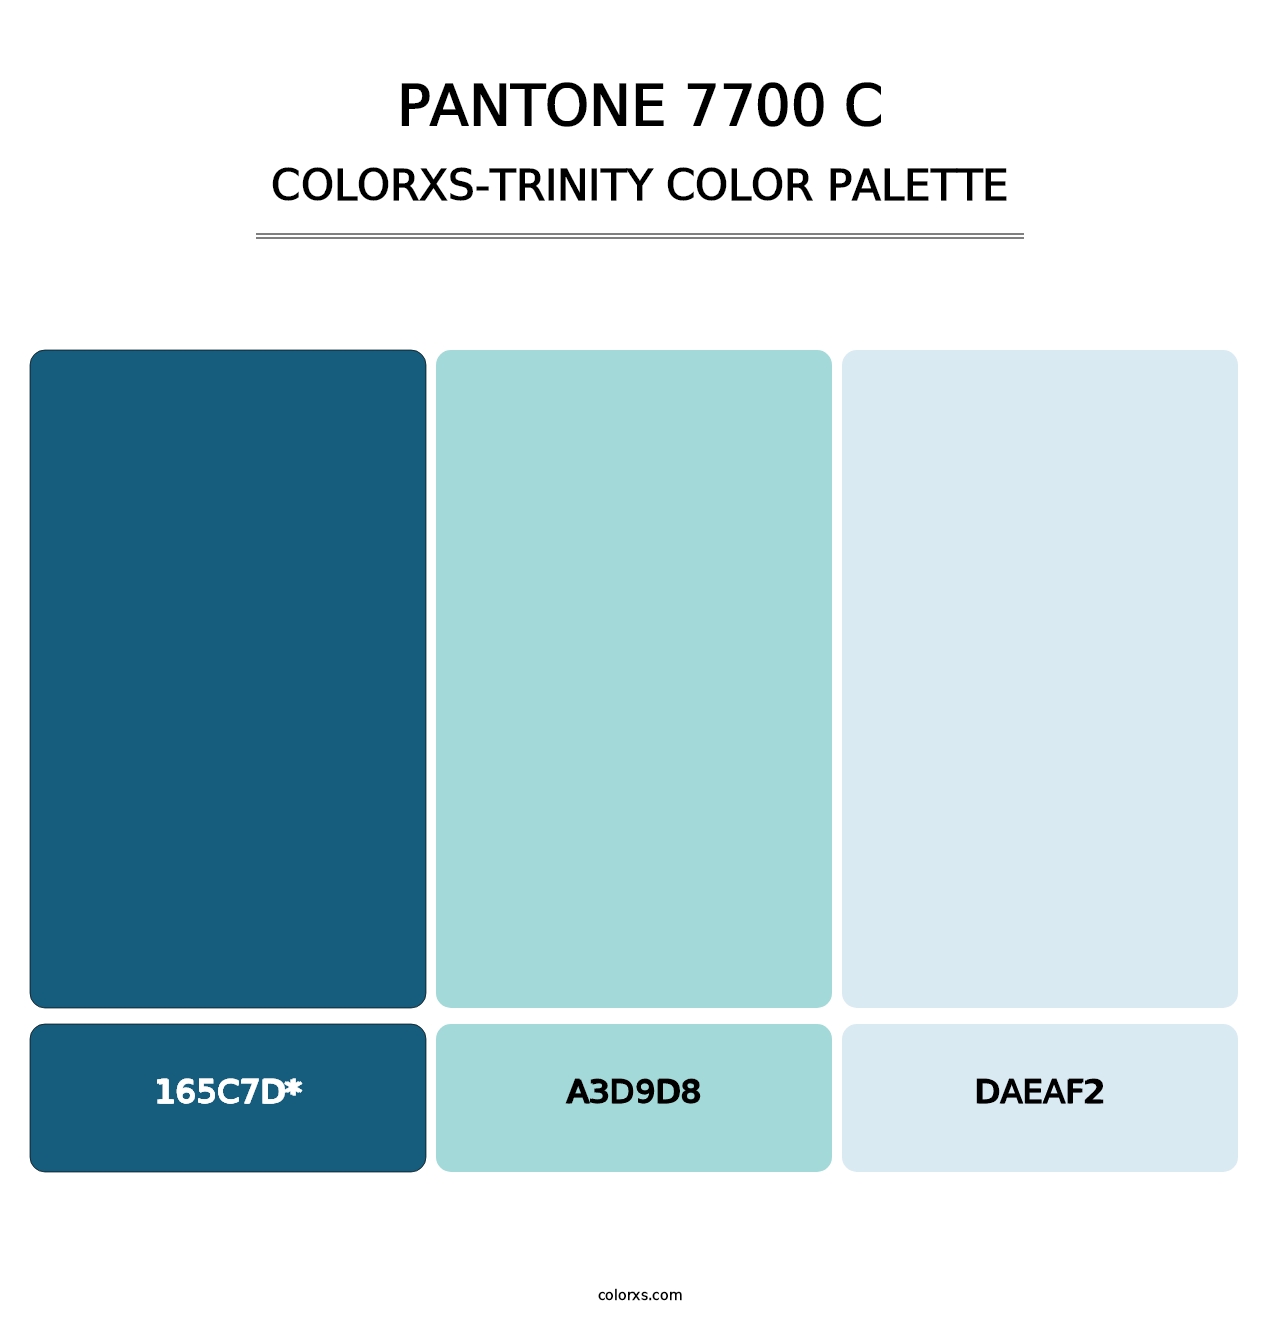 PANTONE 7700 C - Colorxs Trinity Palette